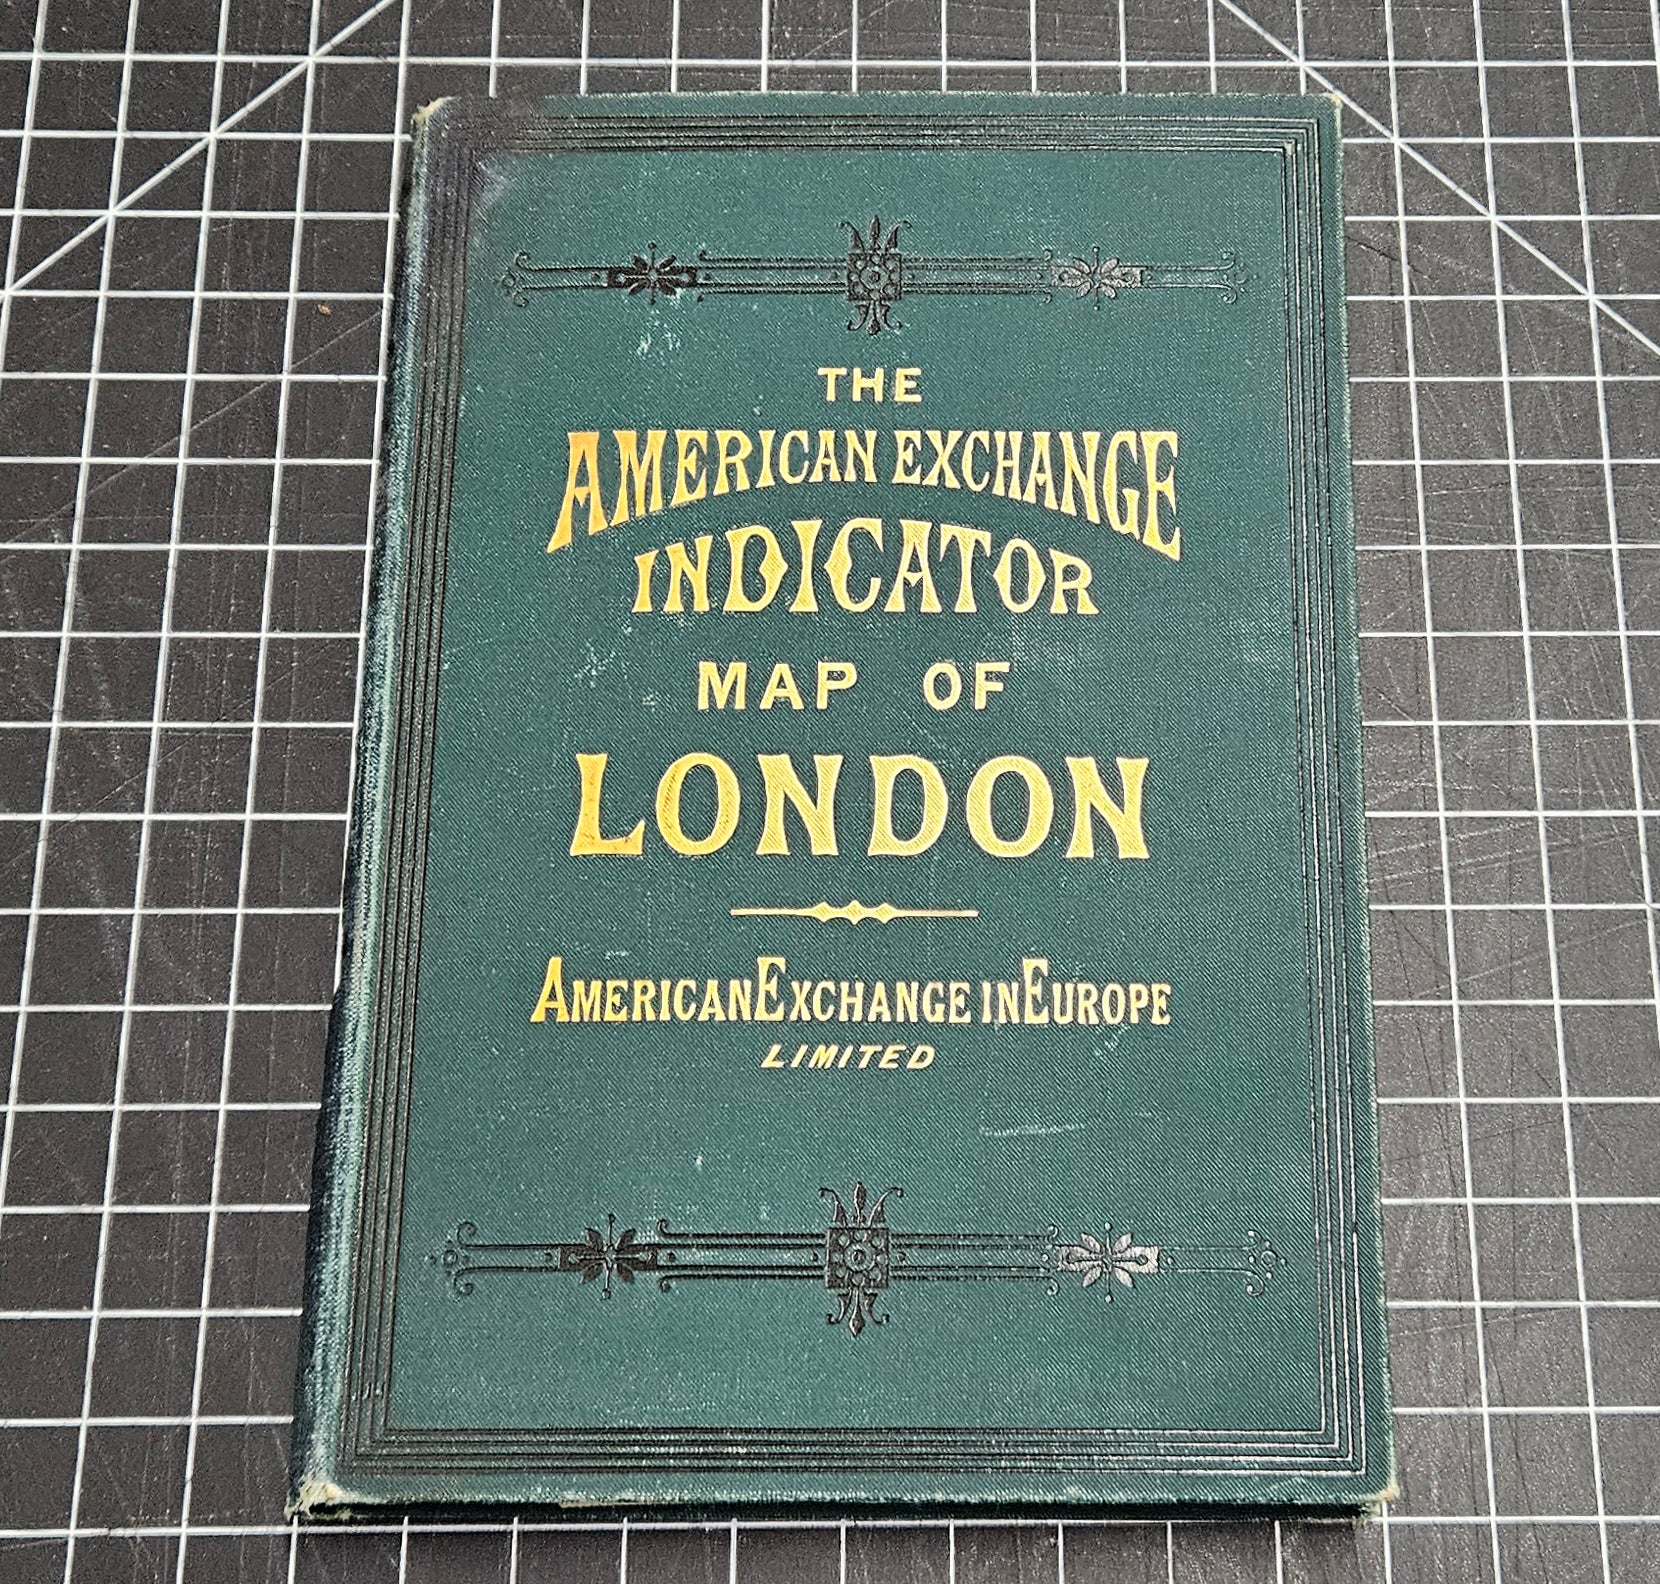 London, England 1885 (American Exchange Indicator Map of London)